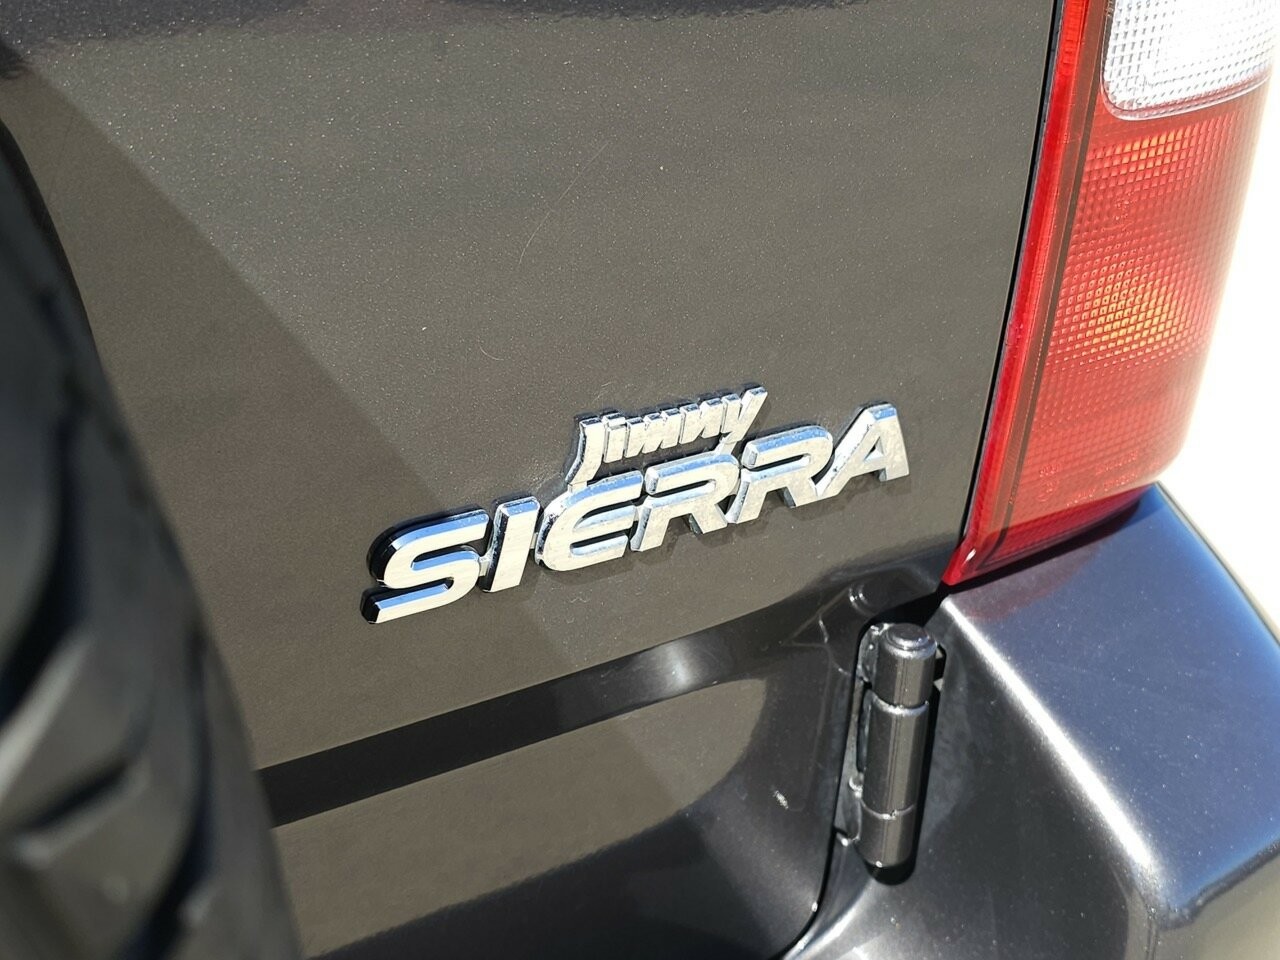 Suzuki Jimny image 3